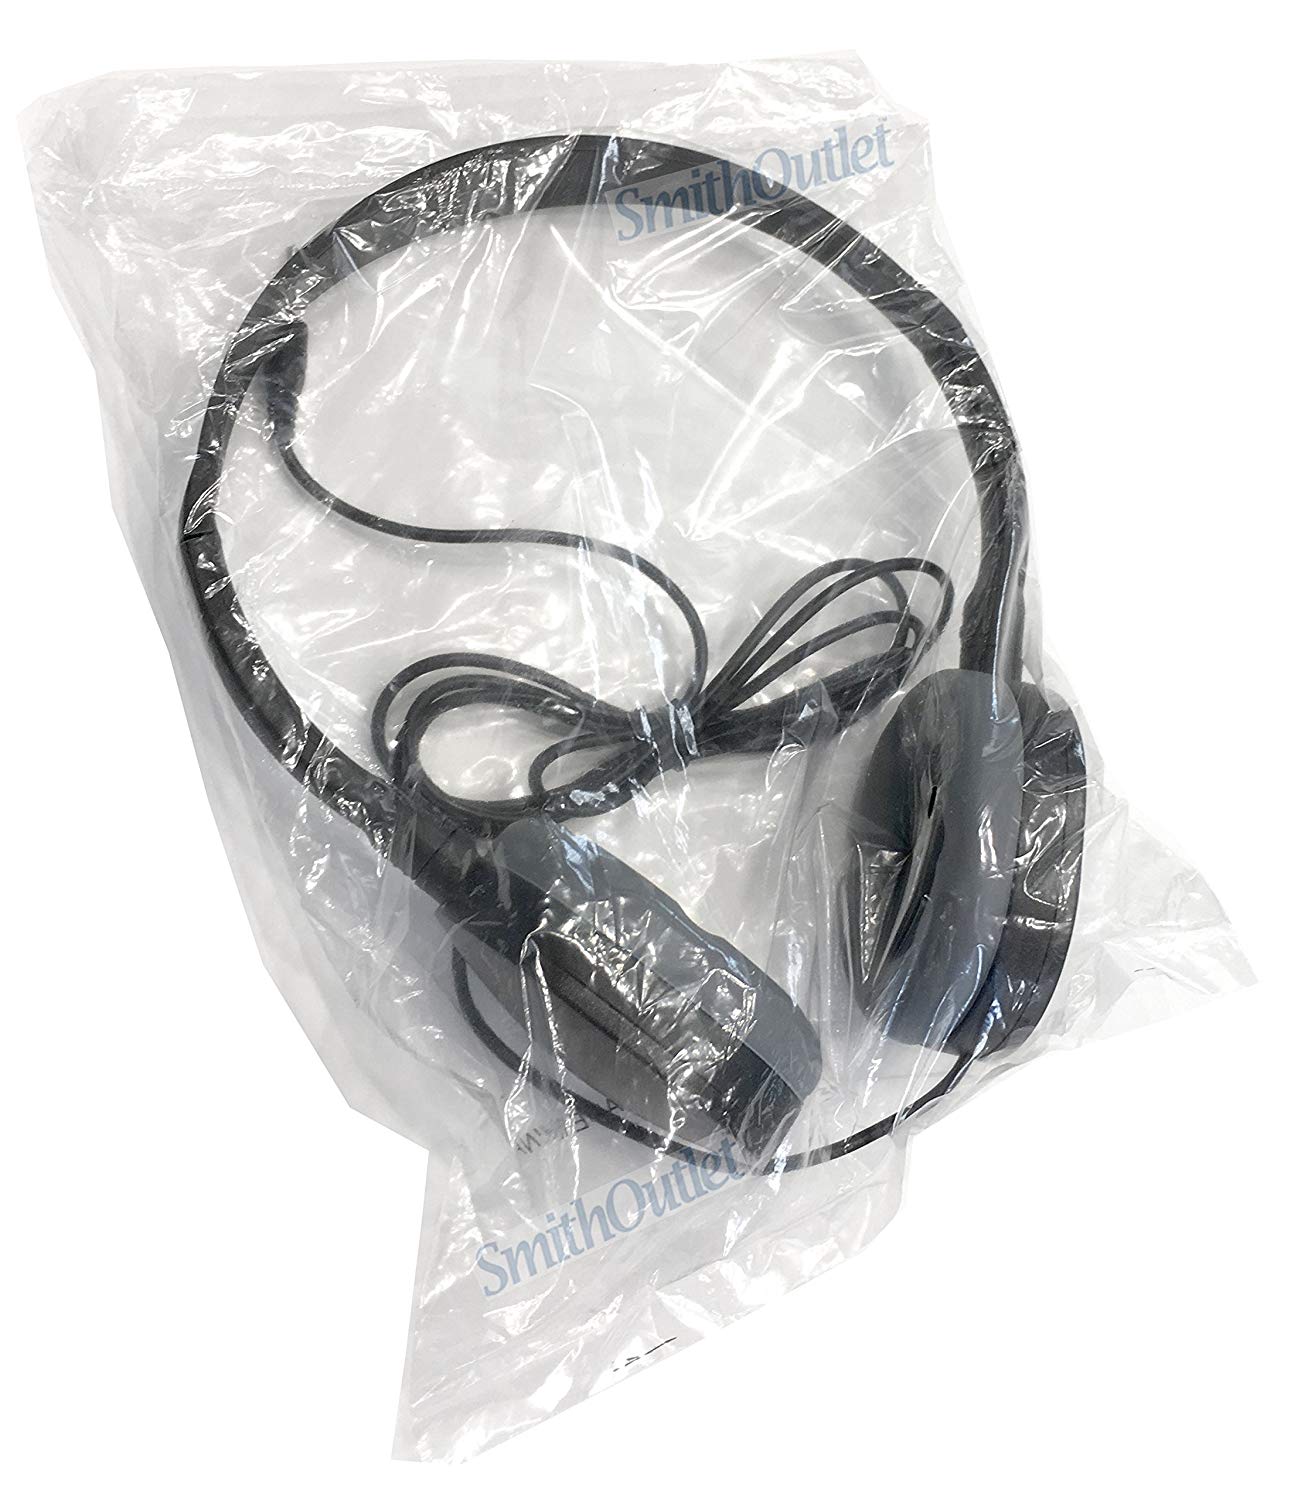 SmithOutlet 100-Pack Headphones in Secure Packaging for Bulk Orders